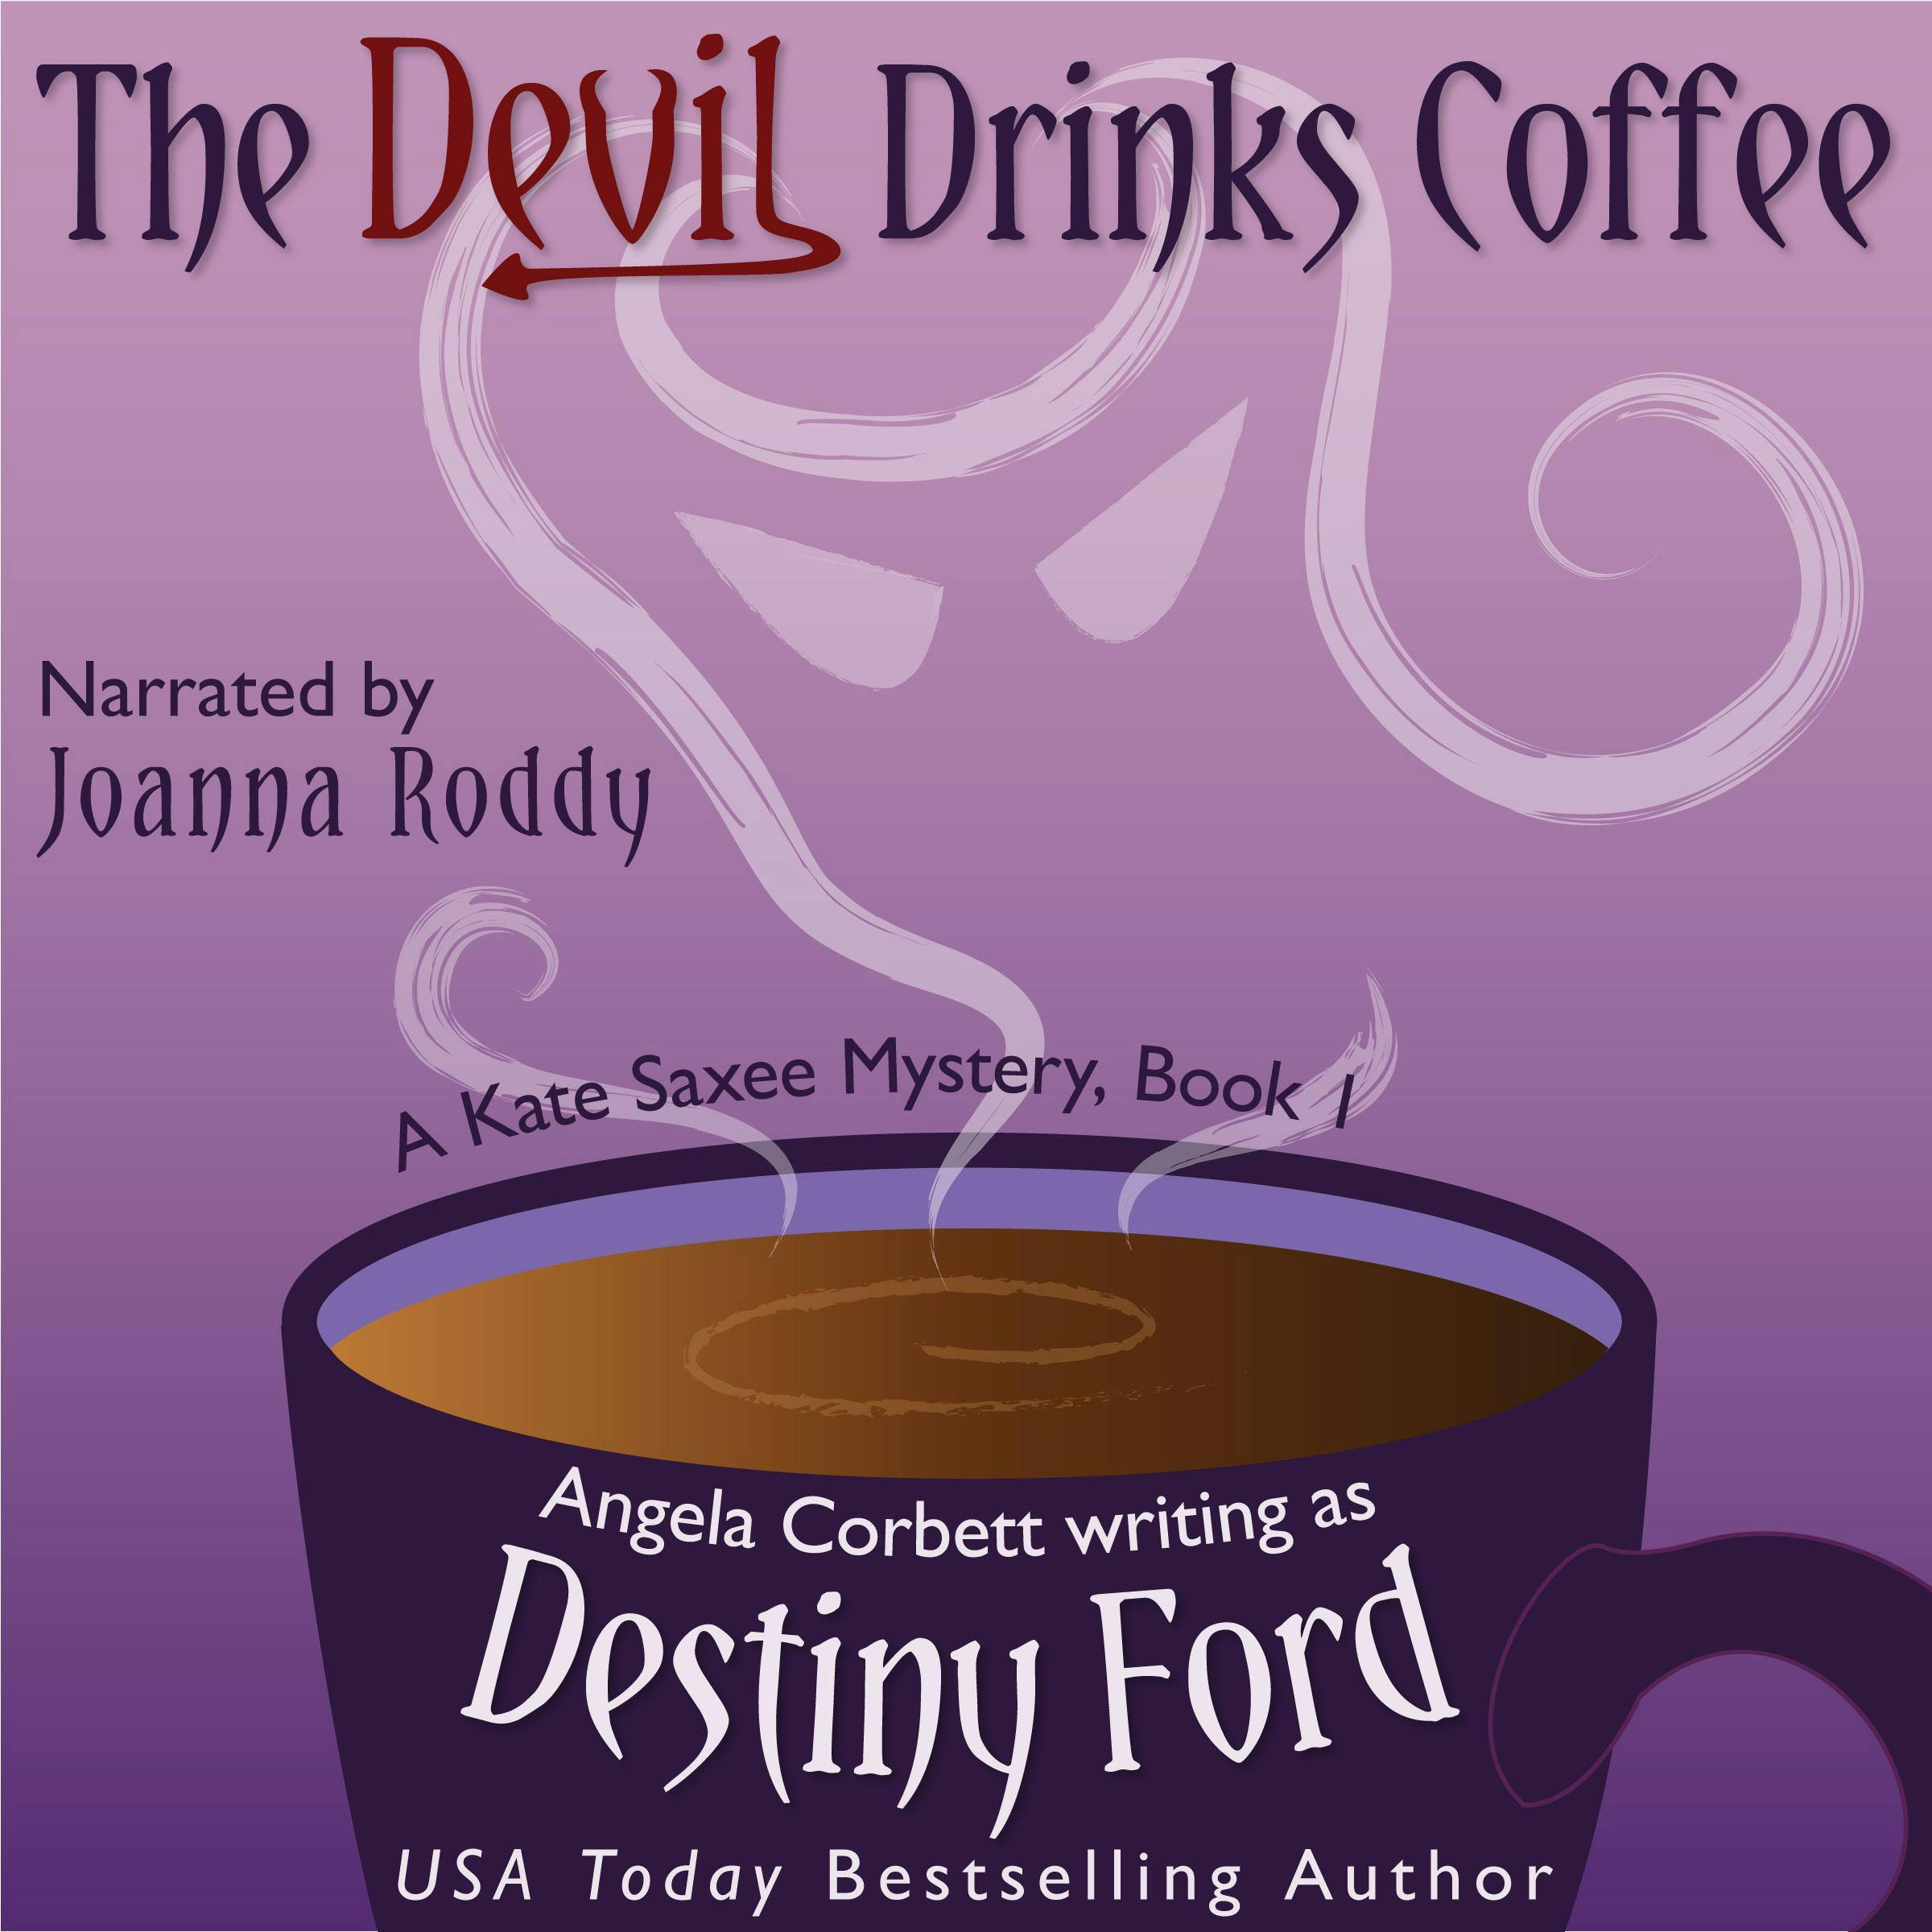 The Devil Drinks Coffee - Angela Corbett, Destiny Ford